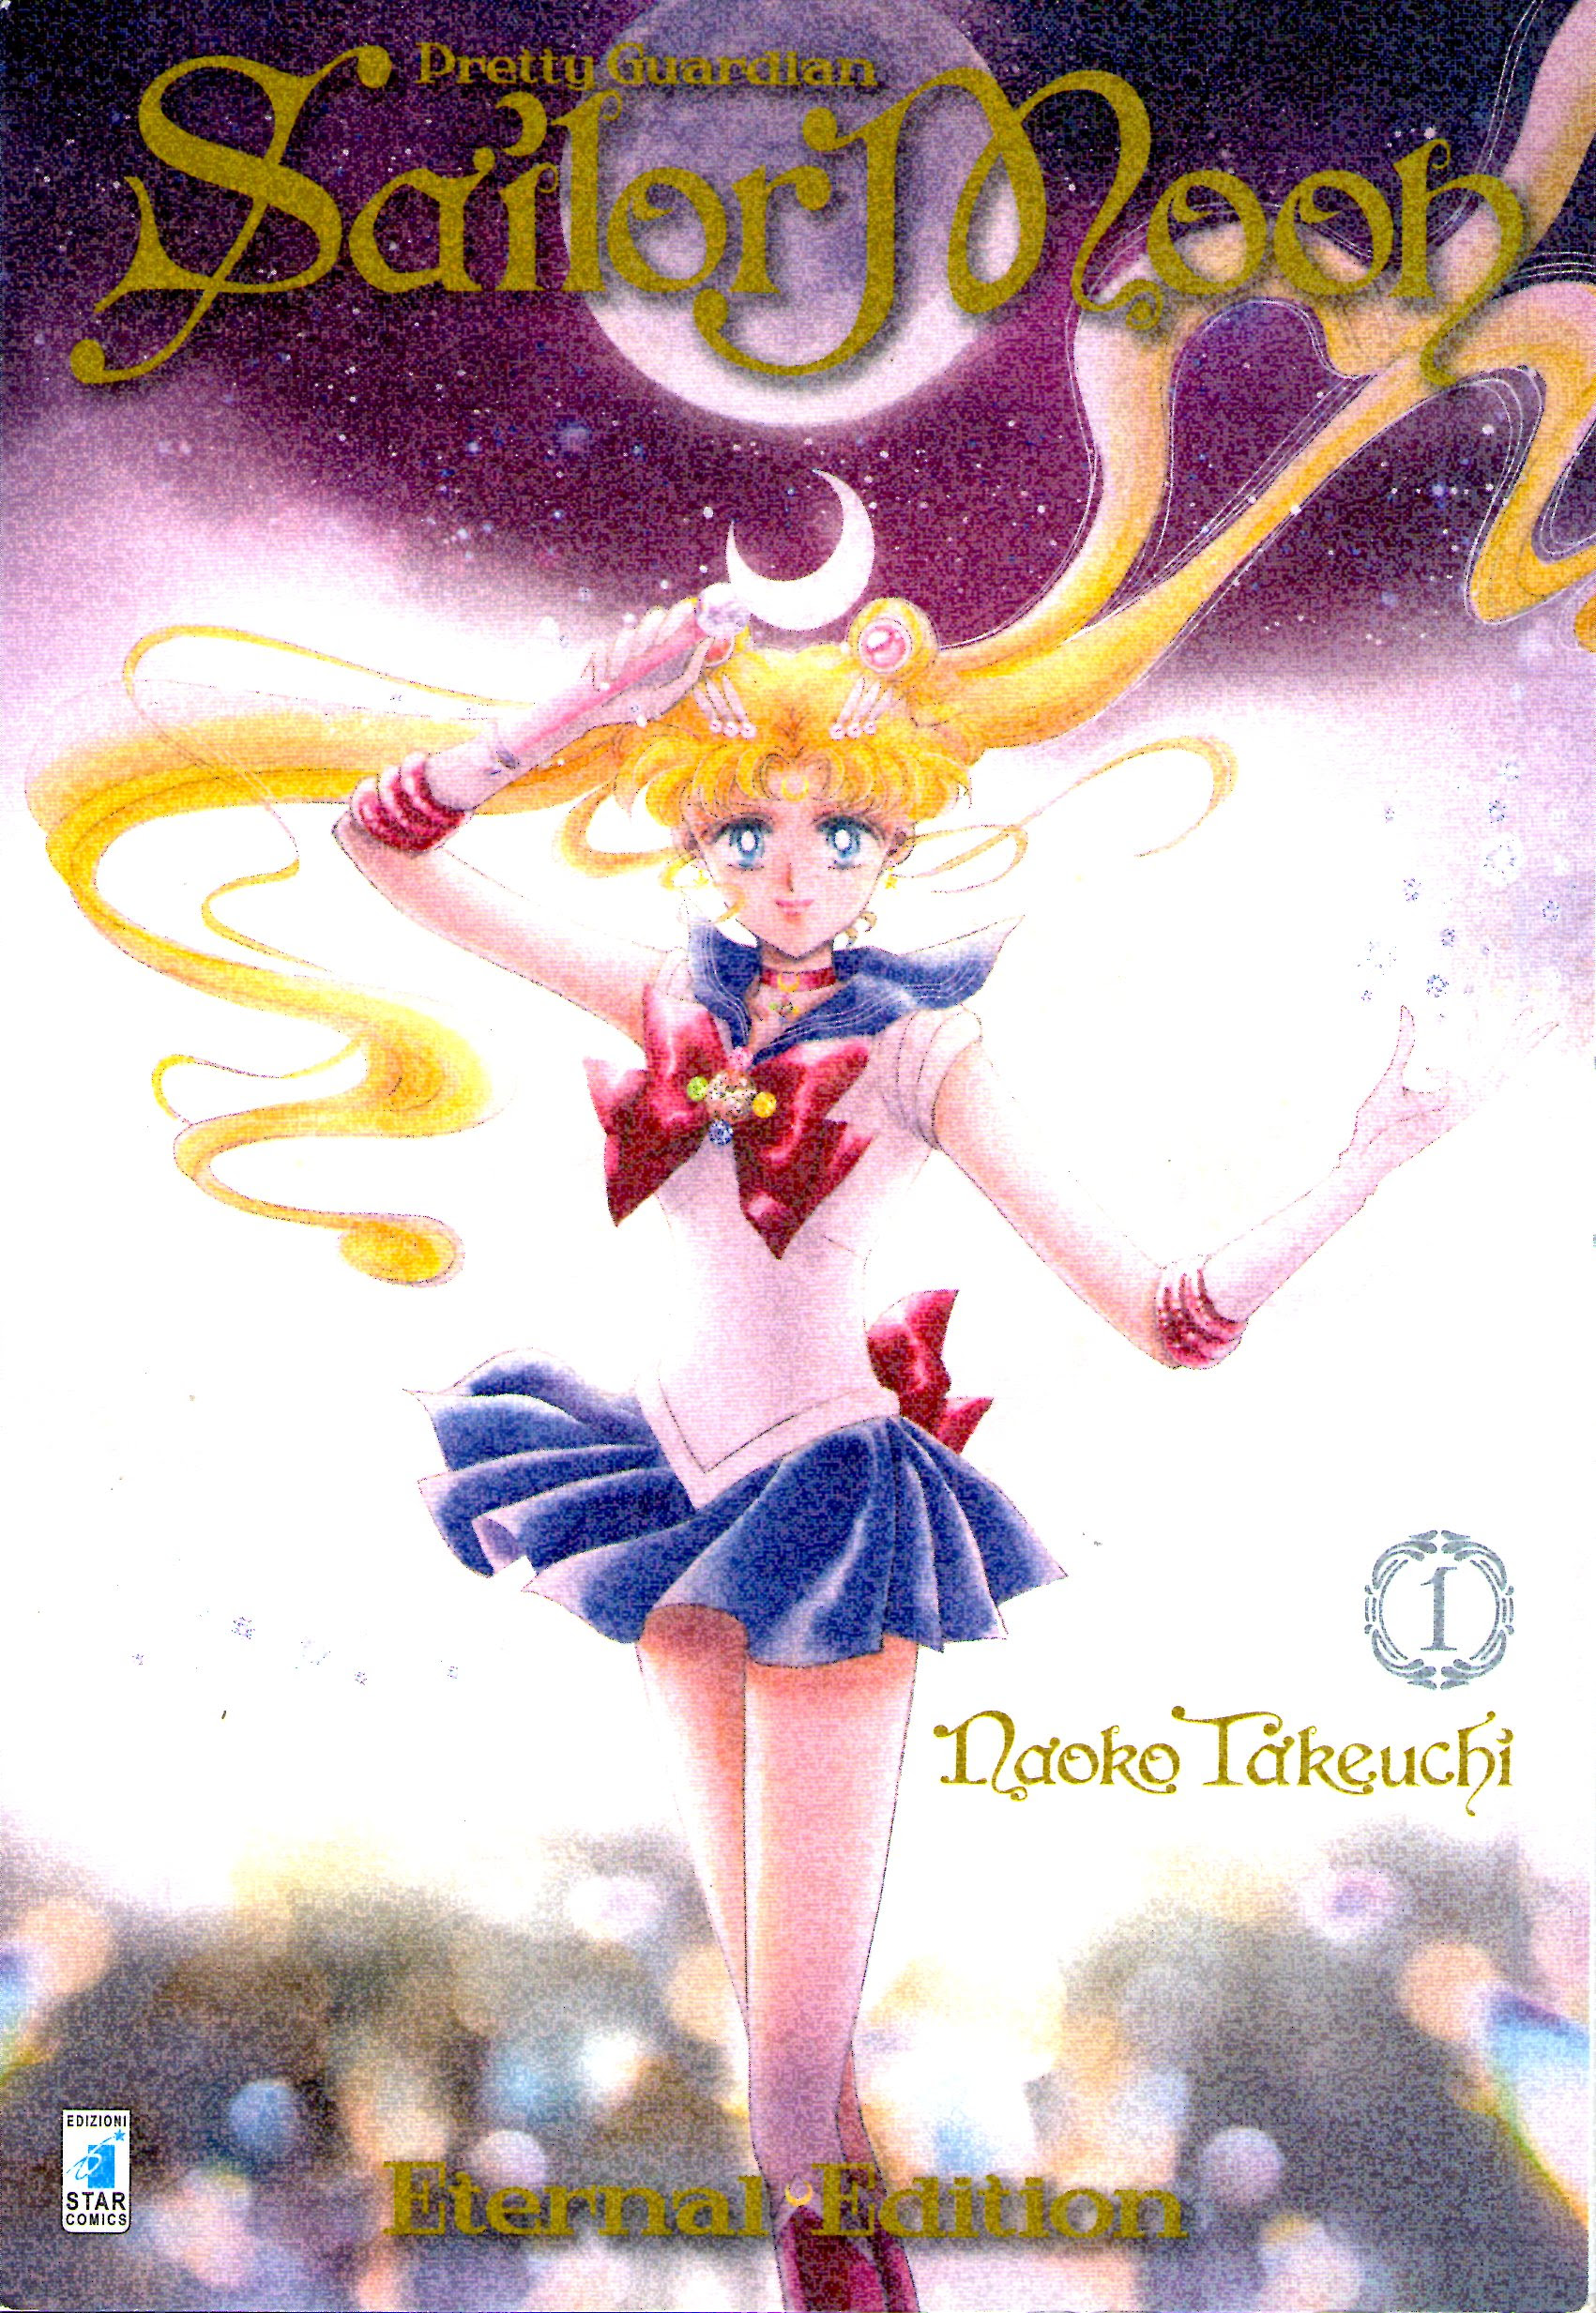 Pretty Guardian Sailor Moon. Eternal edition, Vol. 1 in Kindle/PDF/EPUB